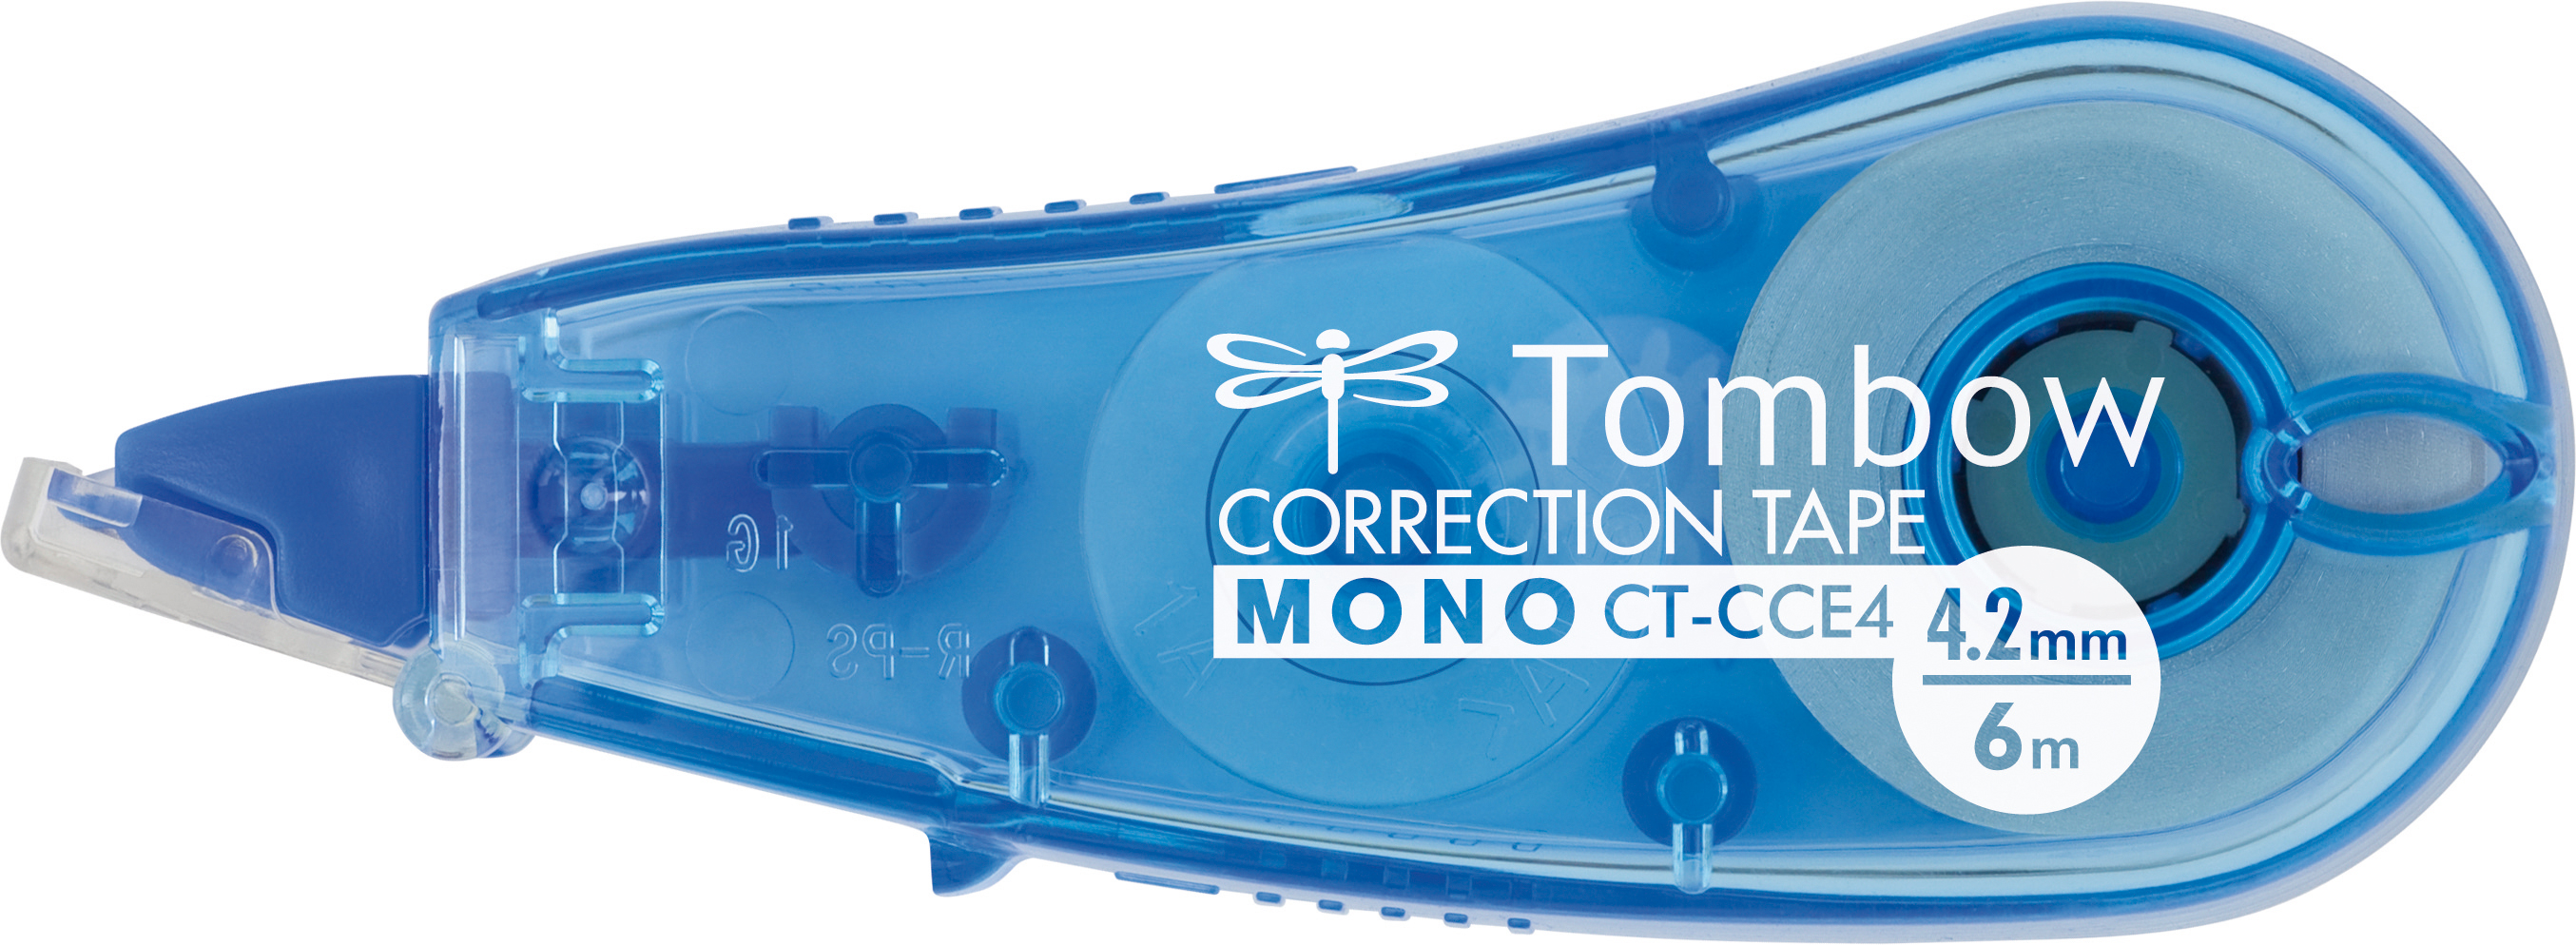 TOMBOW Correction Tape 4,2mm CTCCE4BEB MONO Micro MONO Micro